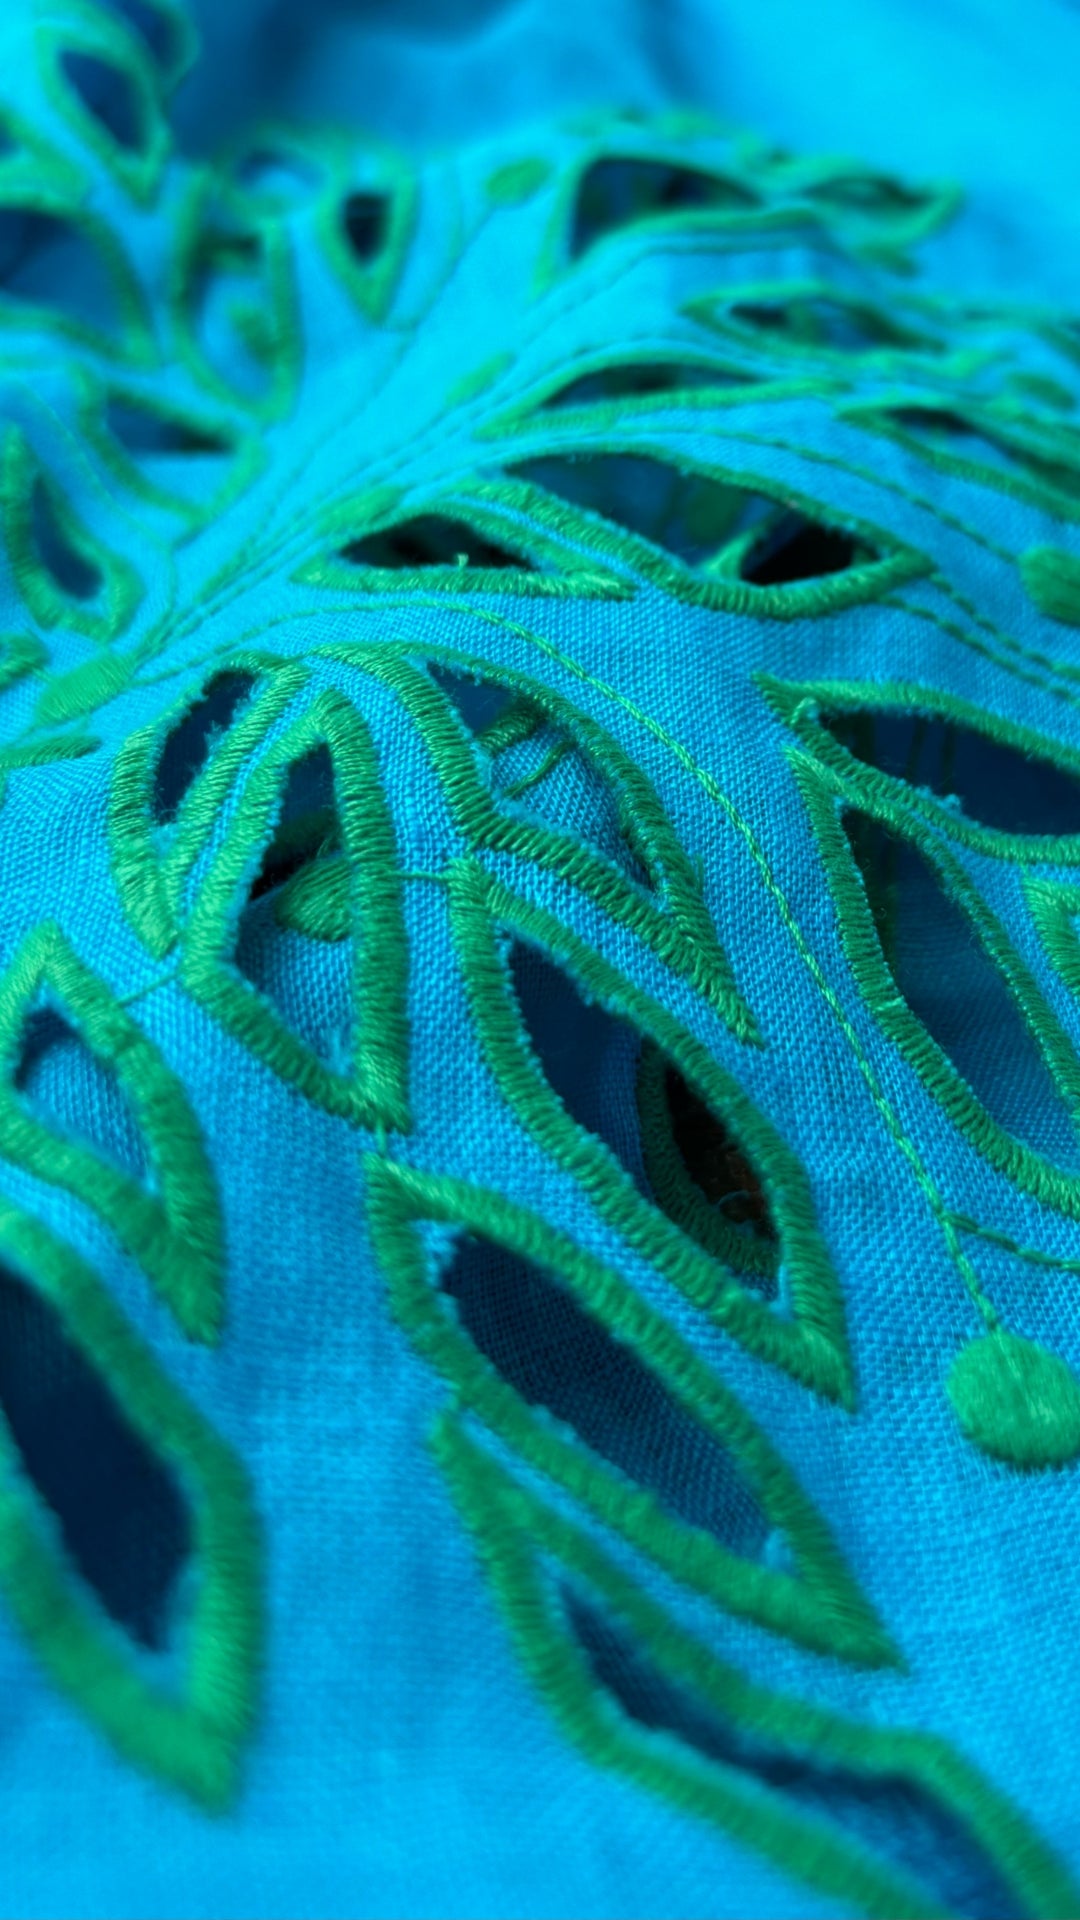 Robe de plage en lin turquoise Diane von Furstenberg, taille small. Vue de près du tissu.